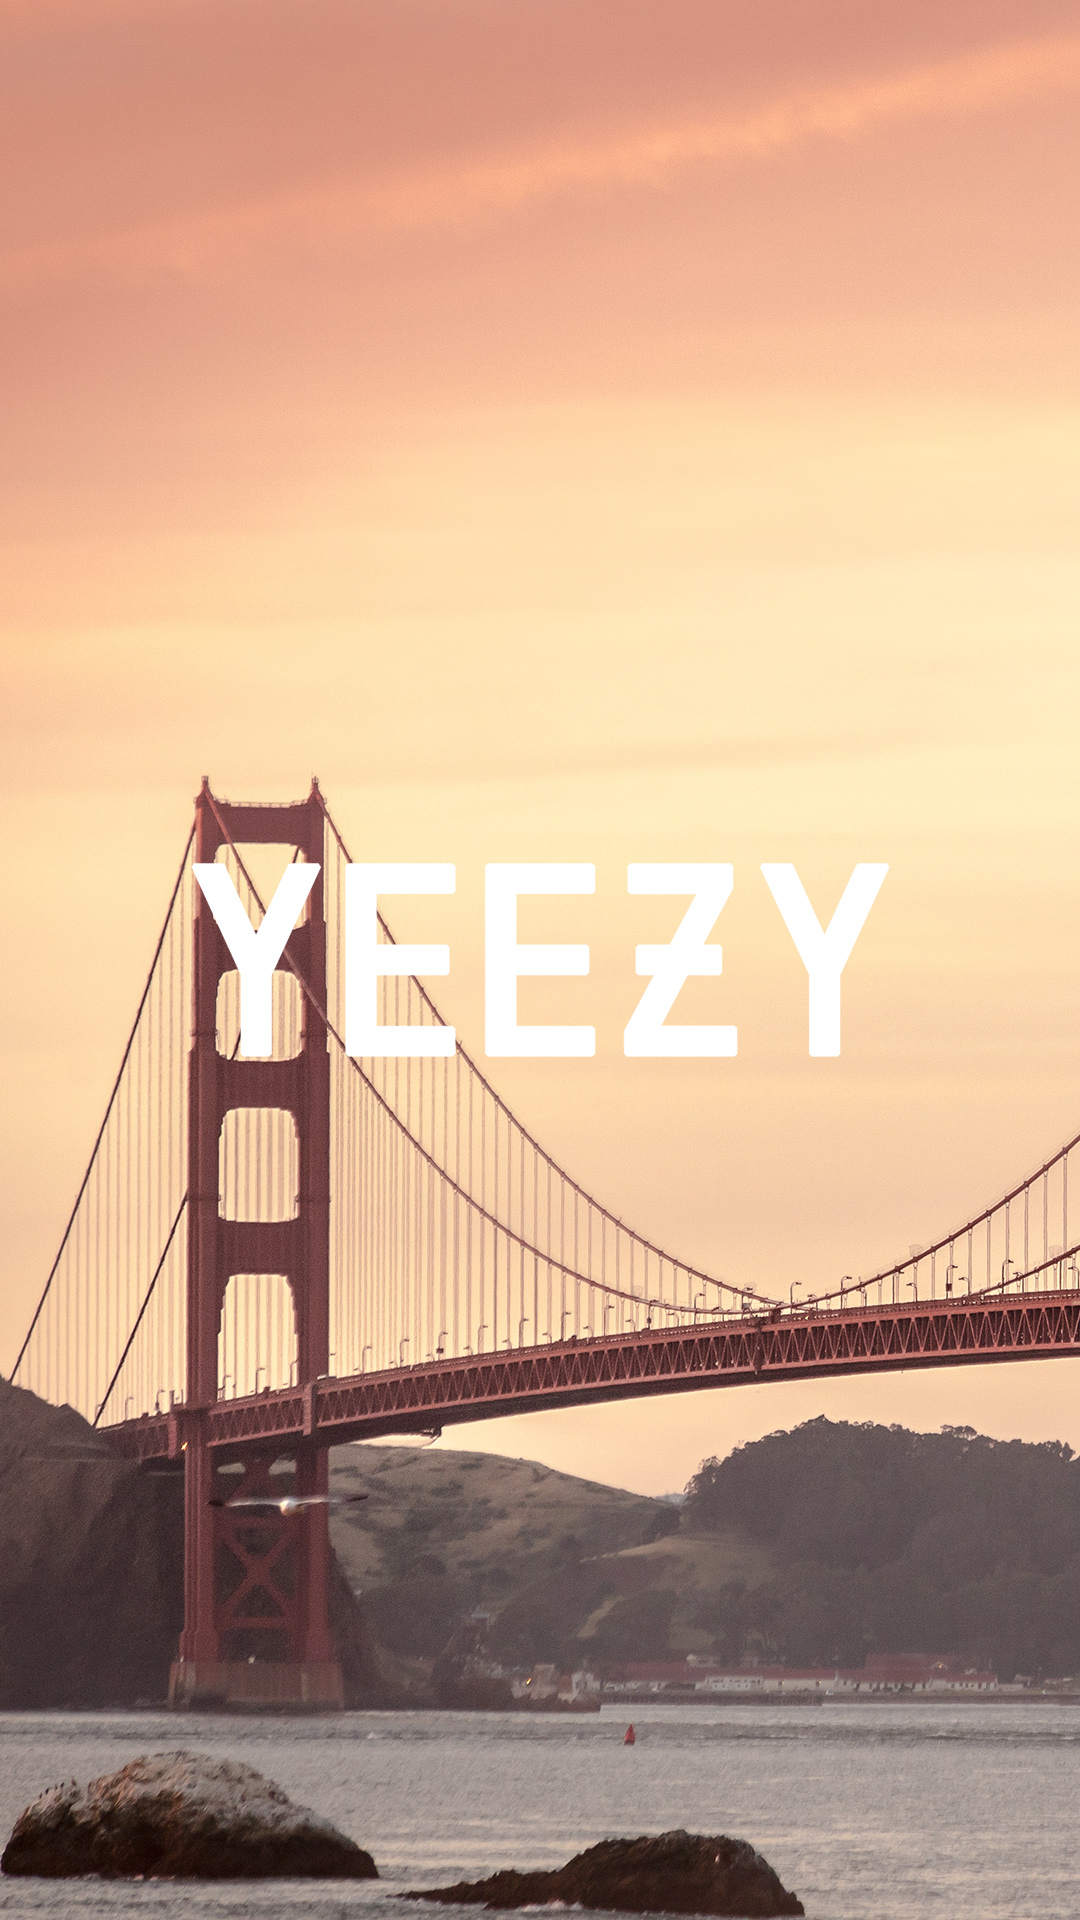 Yeezy San Francisco